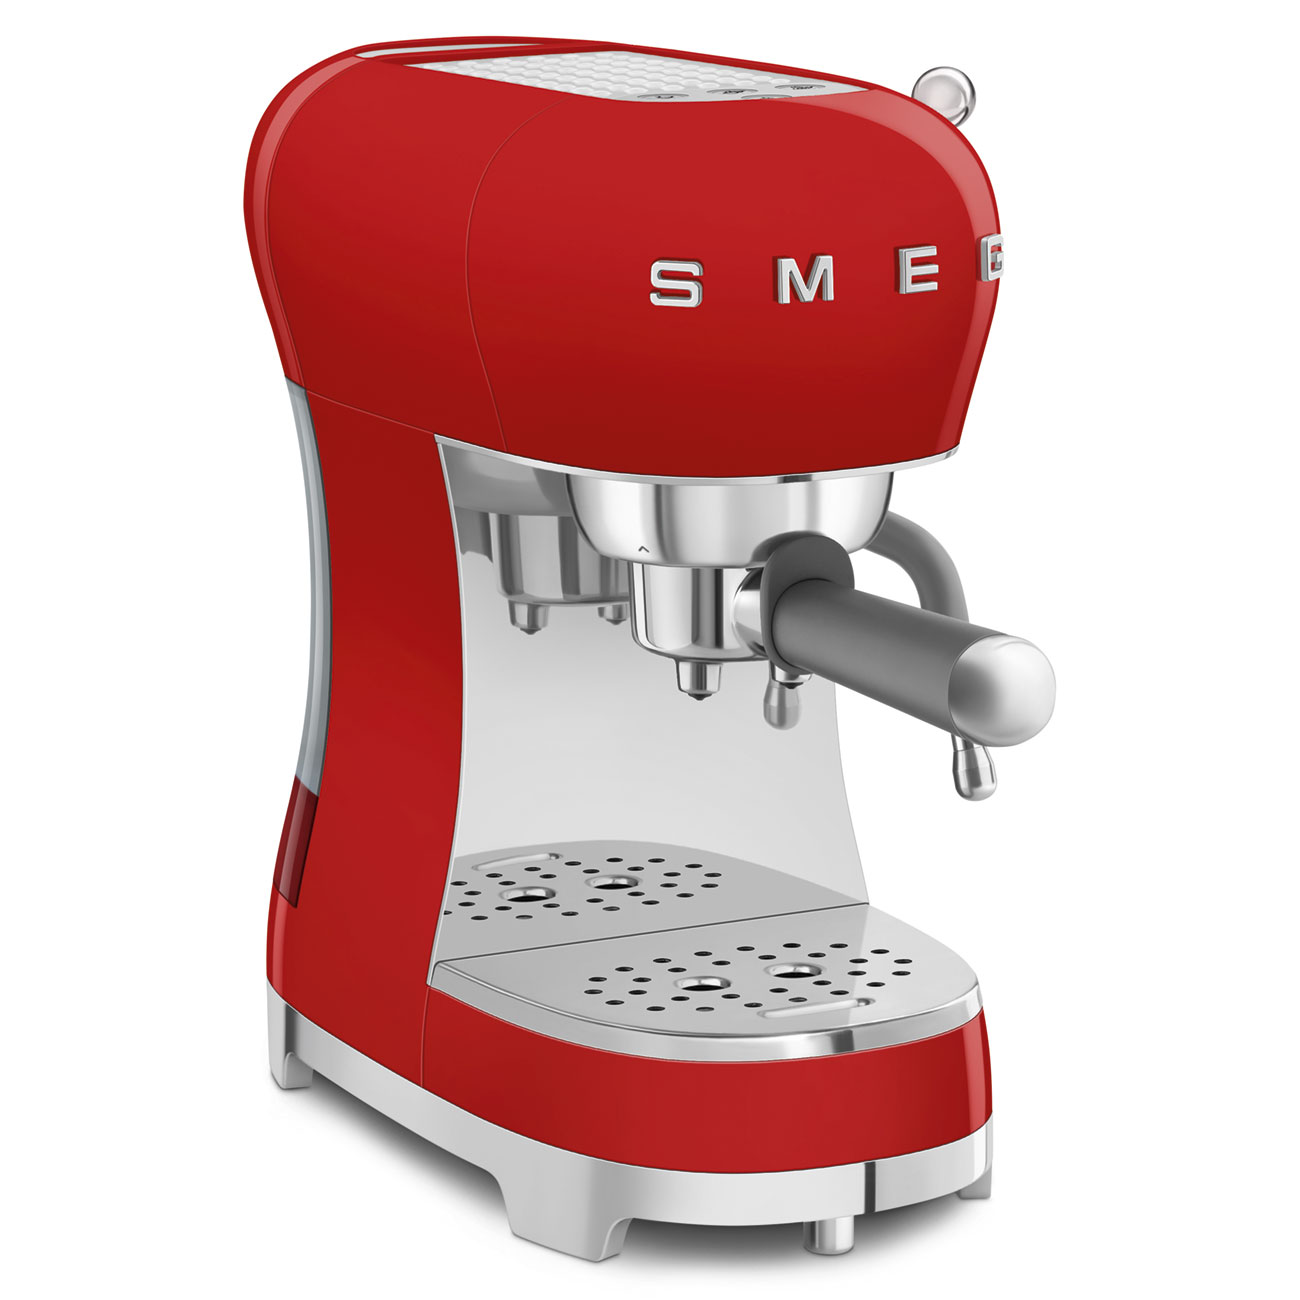 Smeg Red Espresso Manual Coffee Machine with Steam Wand_3